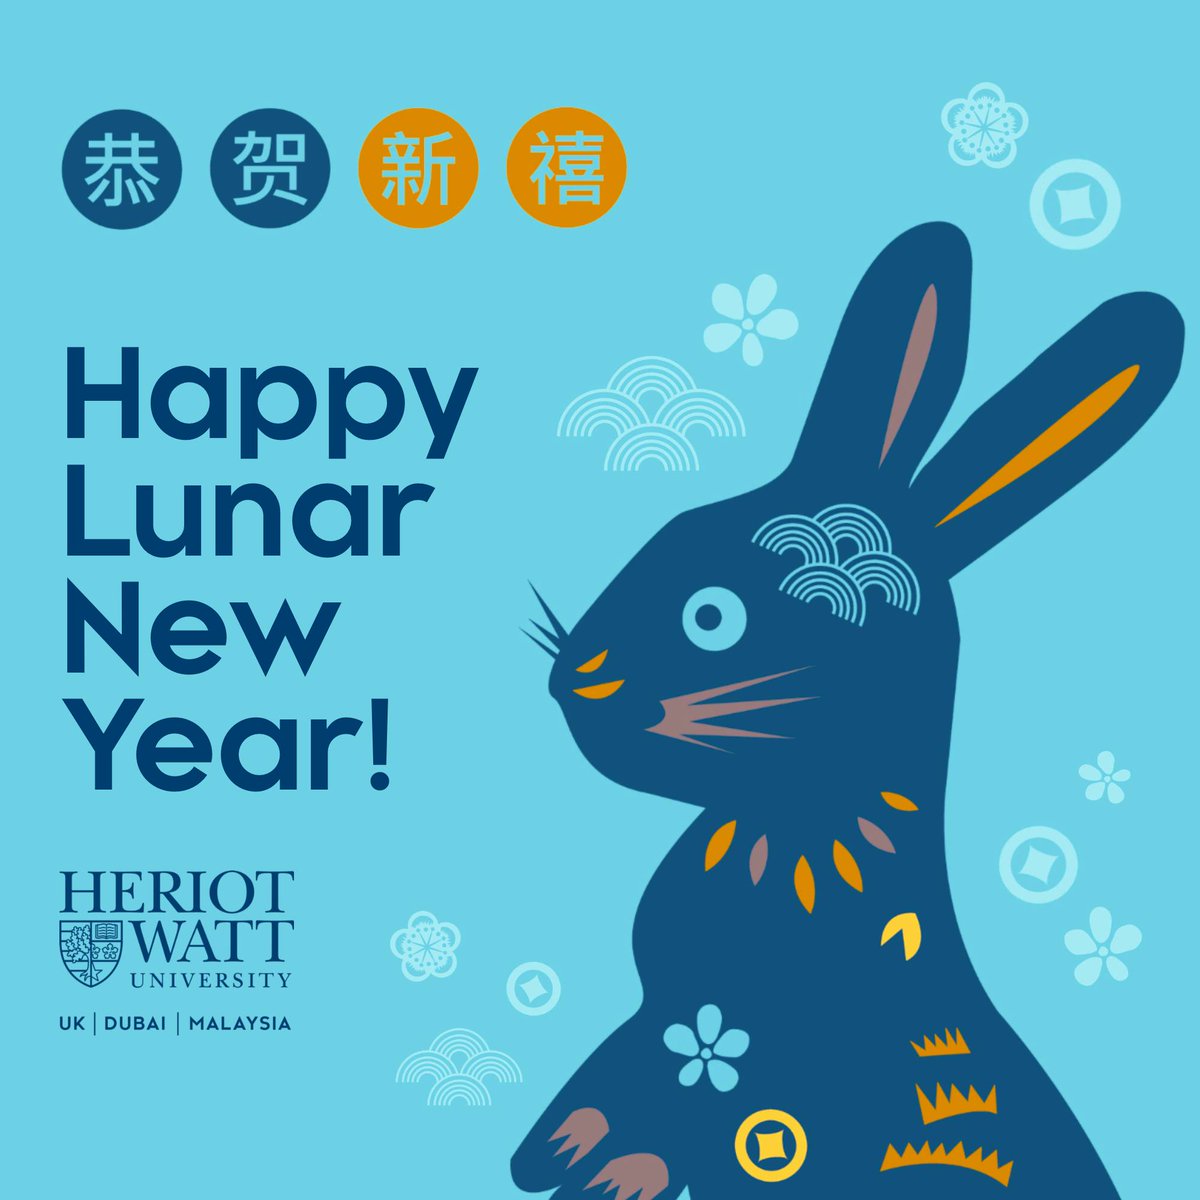 Heriot-Watt University would like to wish a Happy Lunar New Year to all those celebrating, as we welcome in the Year of the Rabbit!🐇

#HWUDubai #OneWatt #ChineseNewYear #YearOfTheRabbit #LunarNewYear